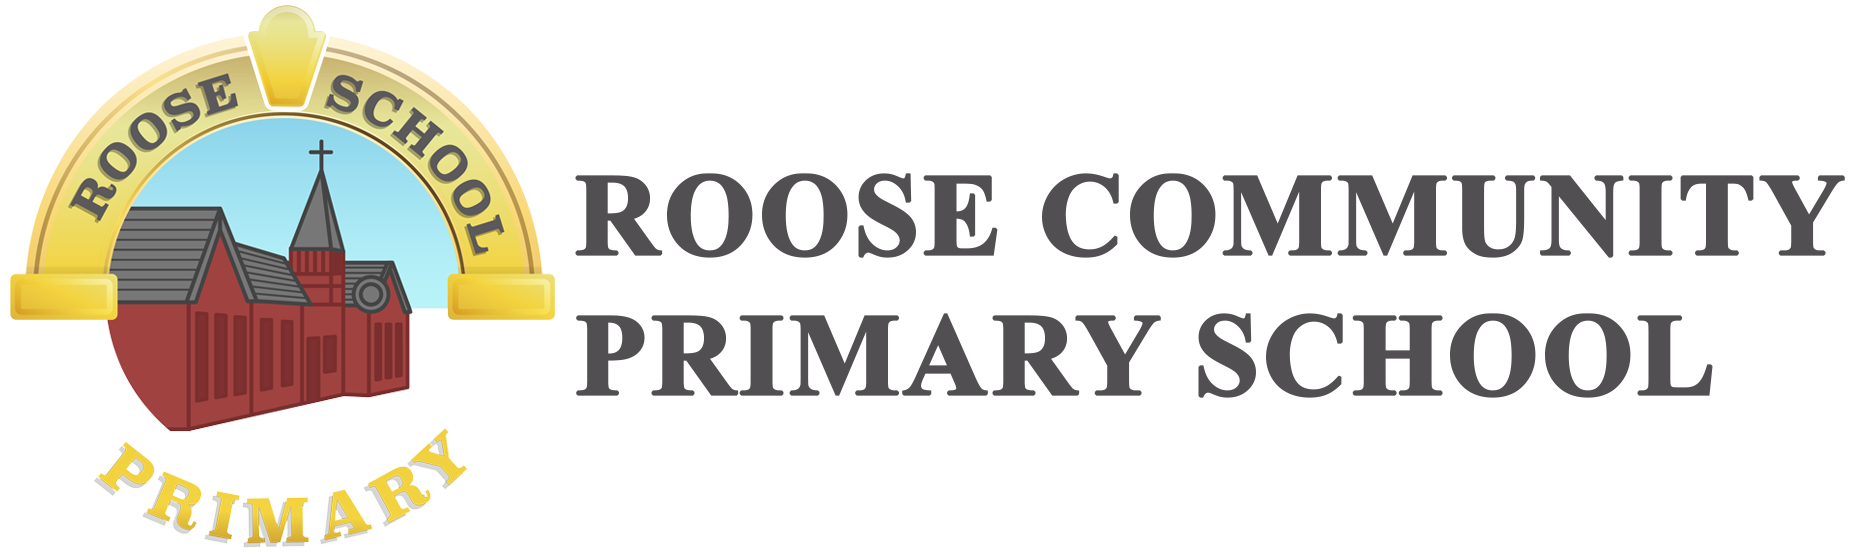 Roose Community Primary School